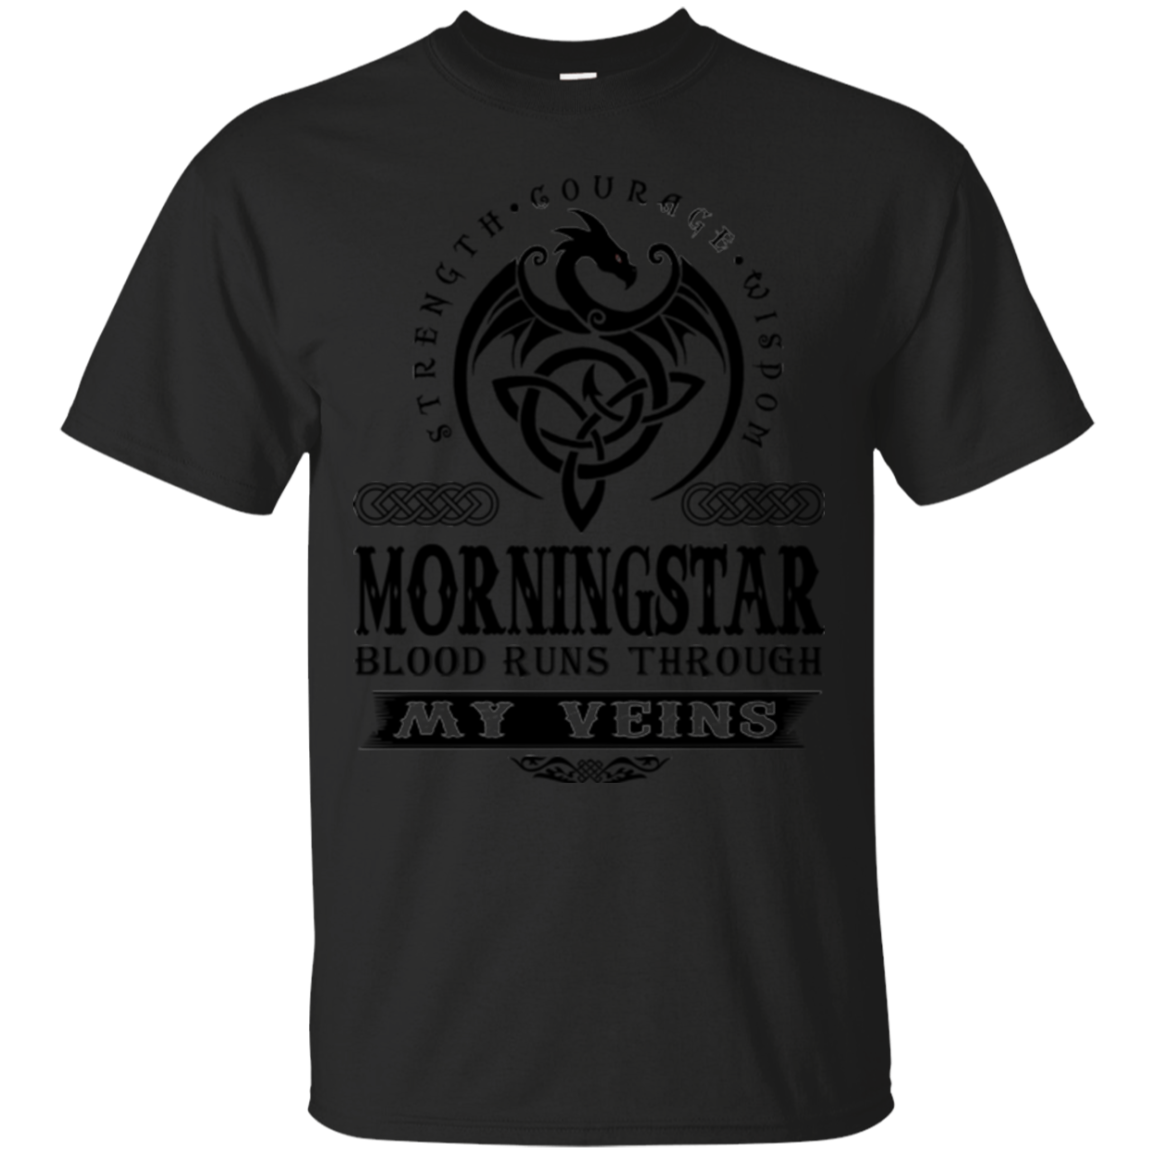 Morningstar Shirts Blood Runs Through My Veins - Teesmiley